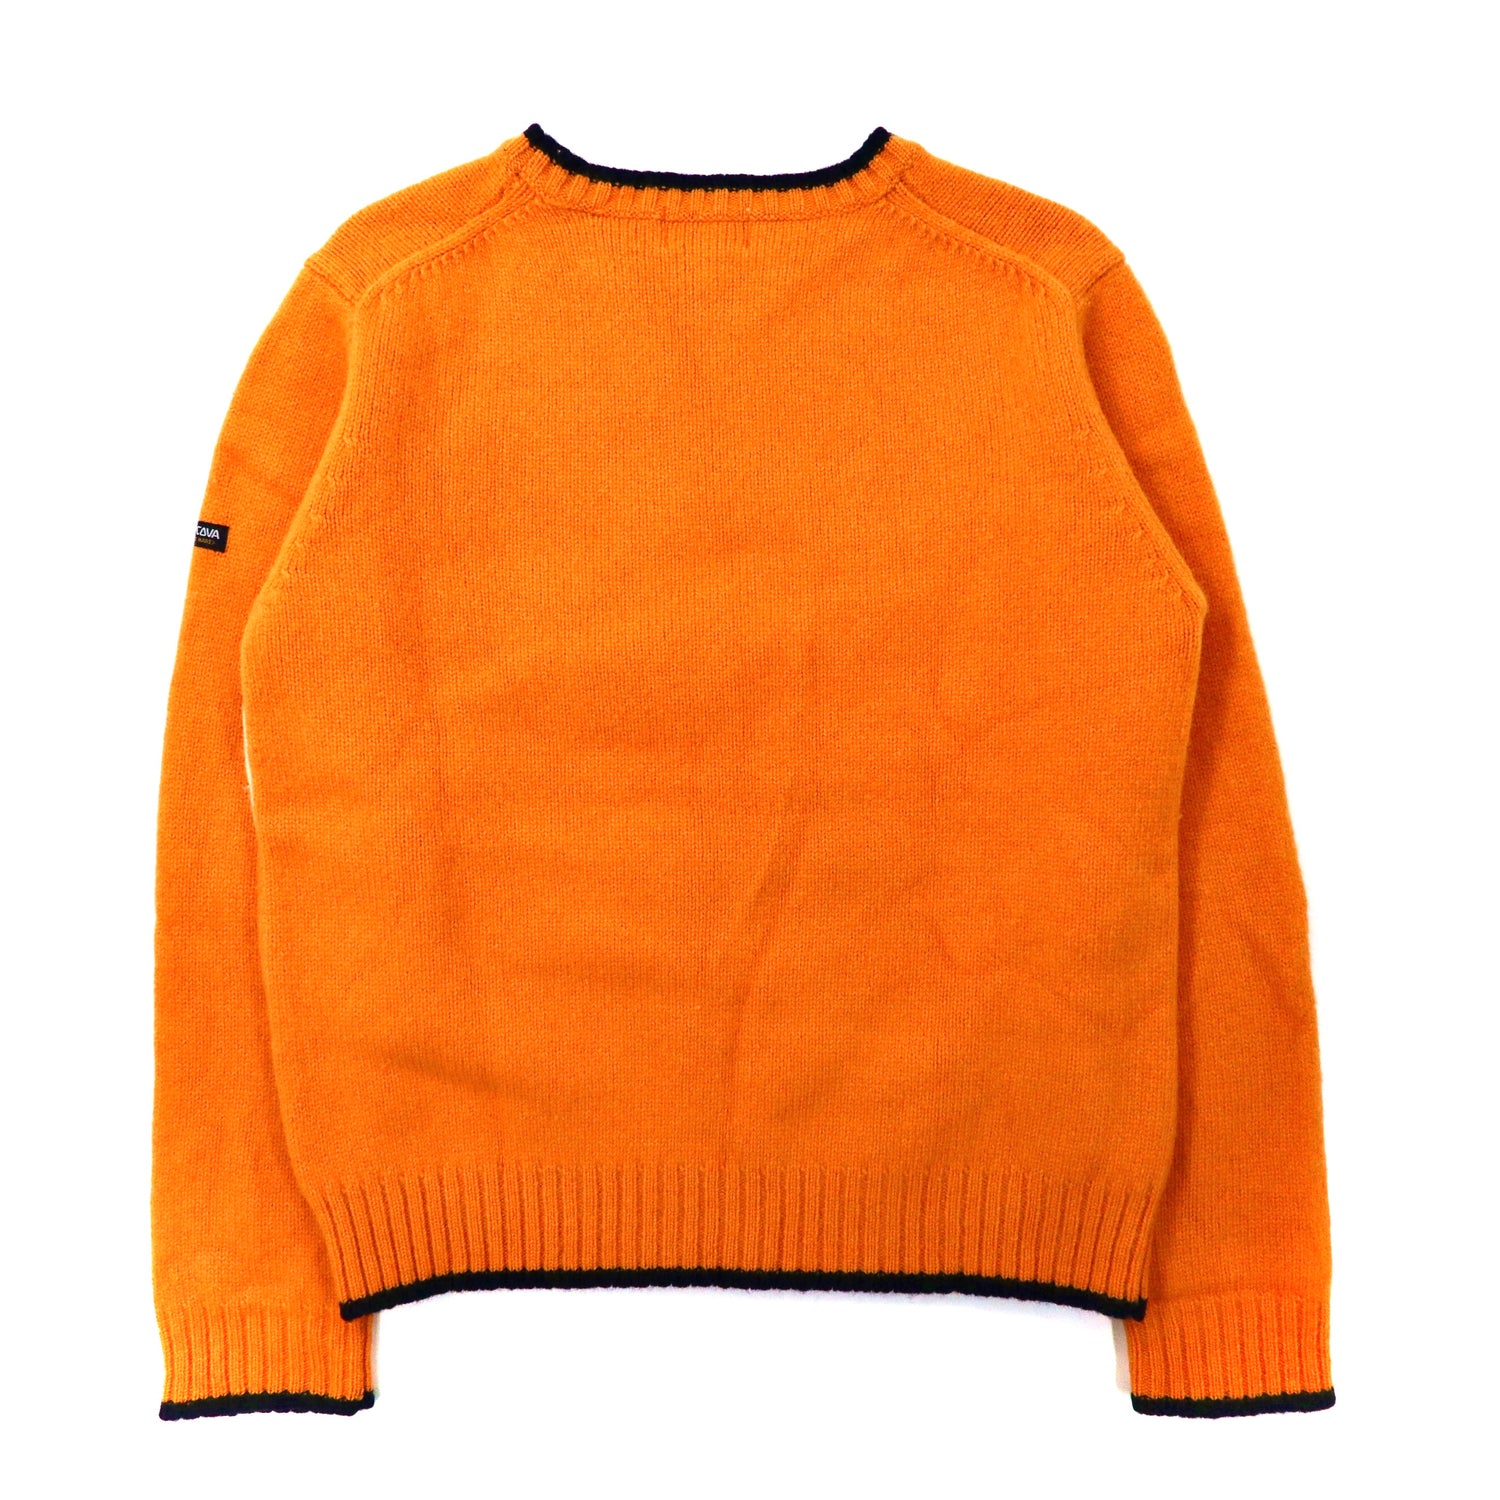 SINA COVA CREWNECK Knit Sweater Free Yellow Wool Anchor